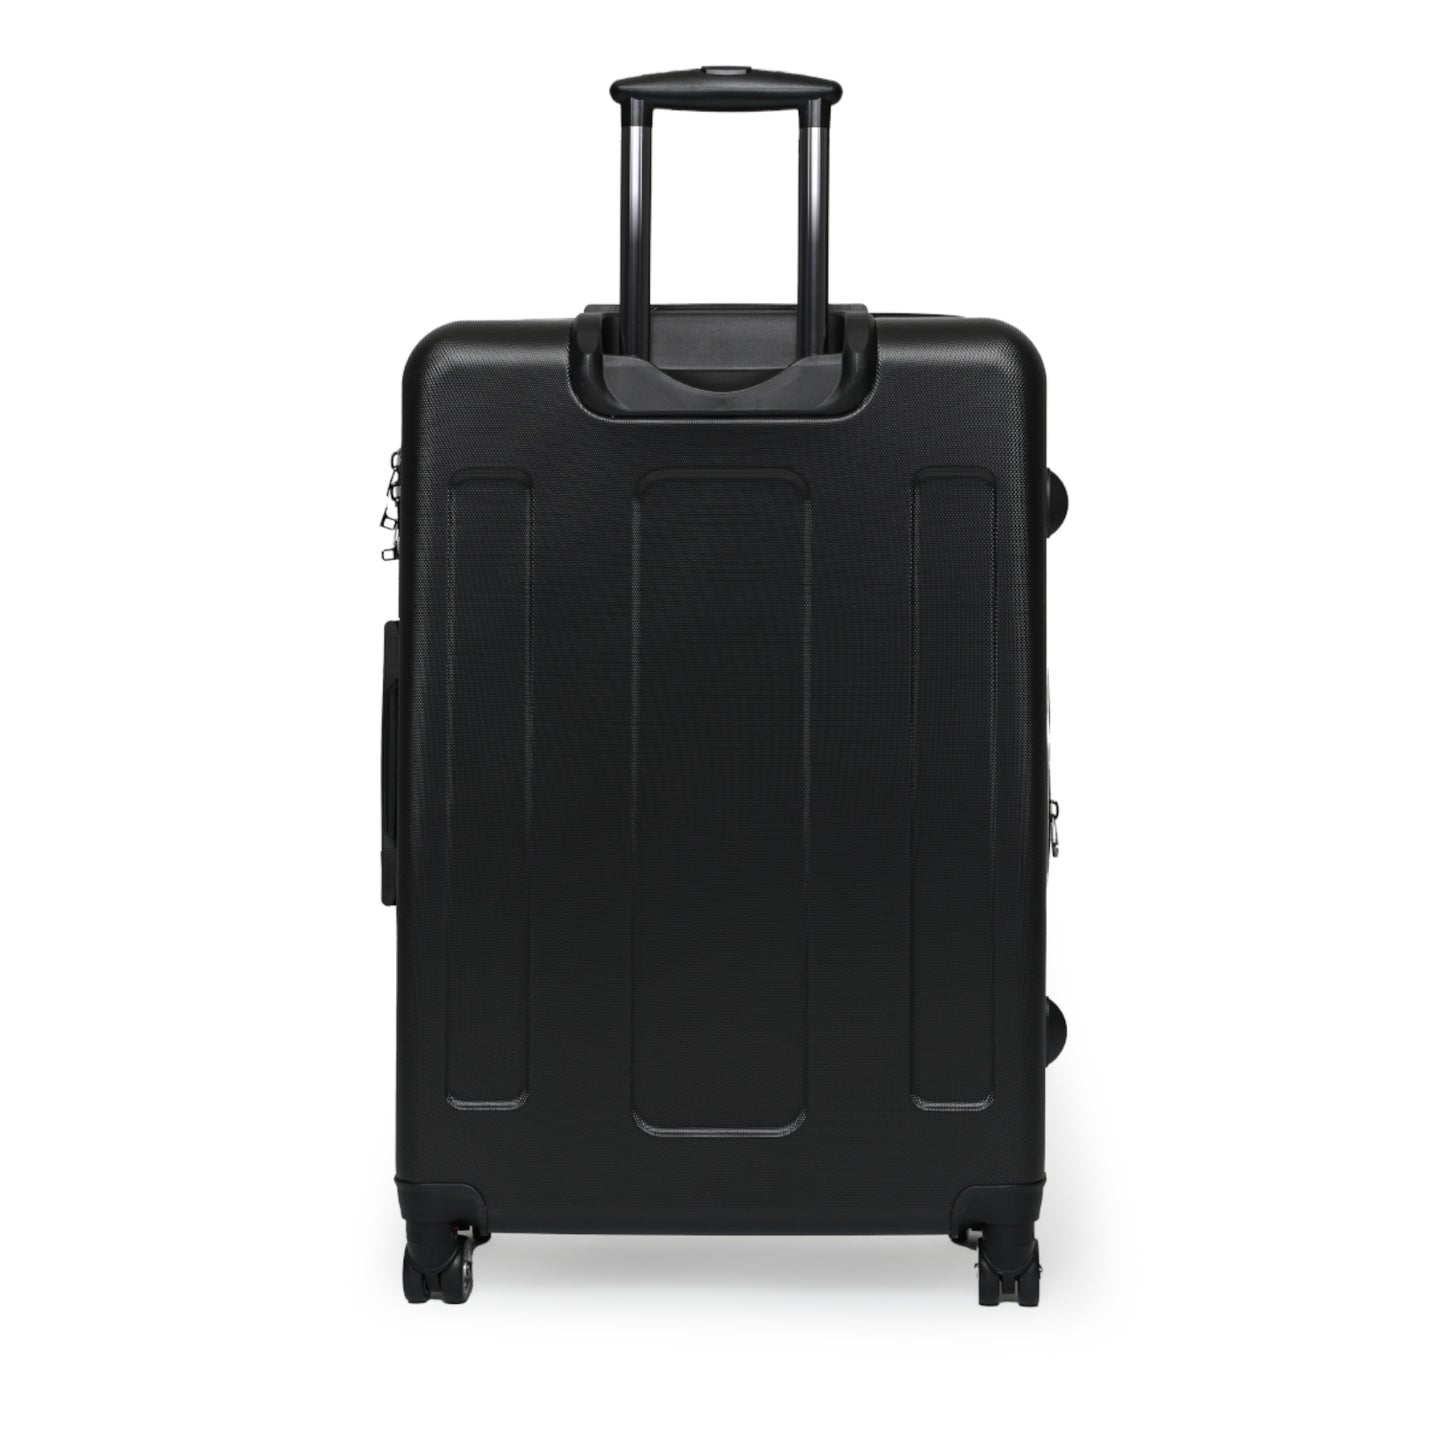 Suitcase, Dark Cottagecore Decor, Whimsigoth Aesthetic, Celestial Travel Accessory